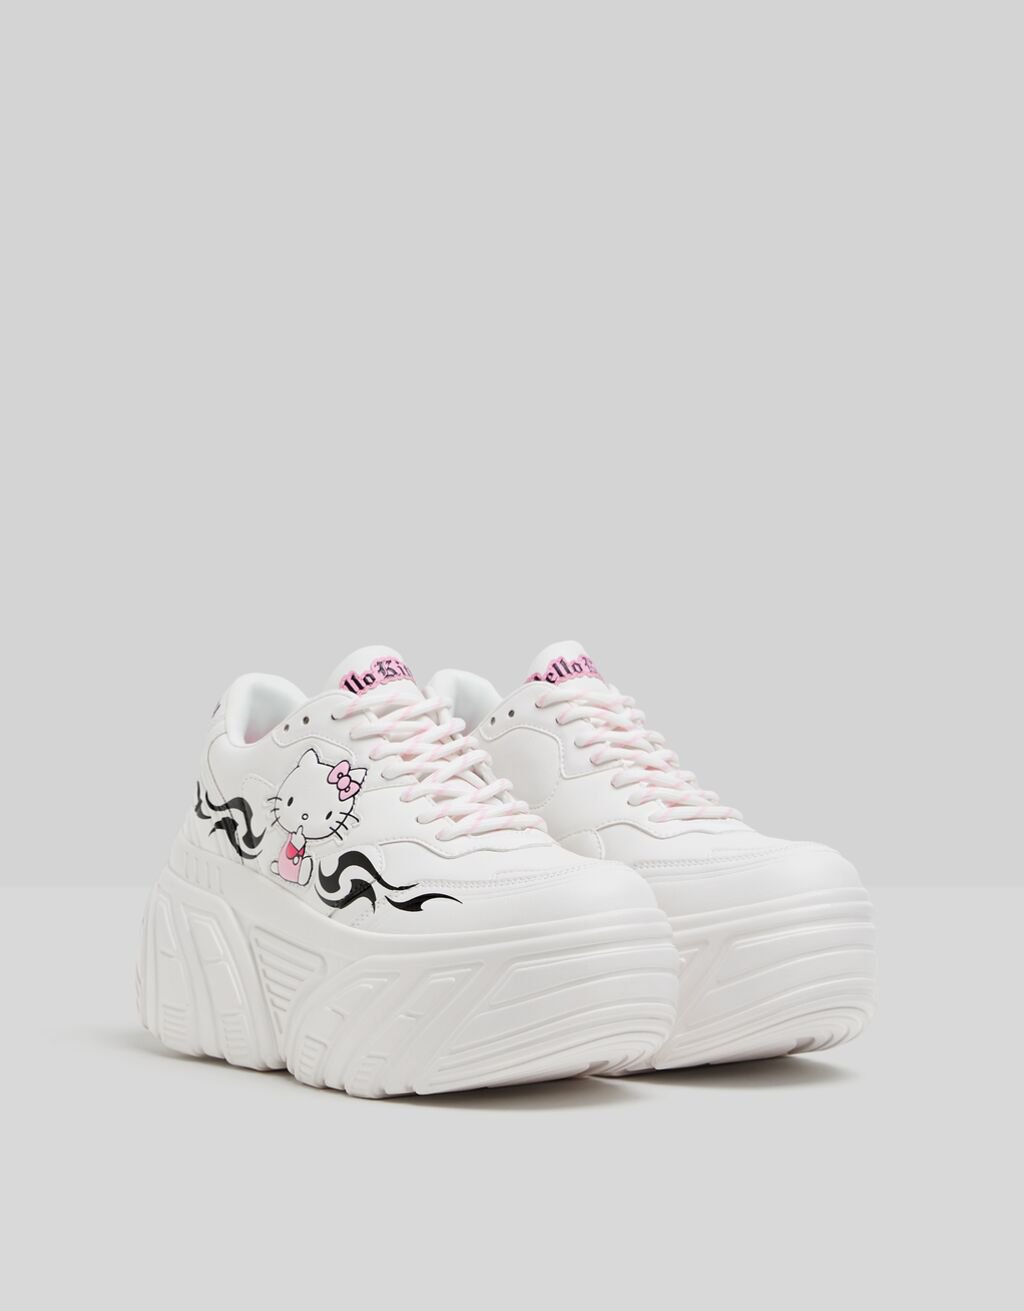 bershka Hello Kitty platform sneakers - Shoes - Woman | Bershka | ShopLook